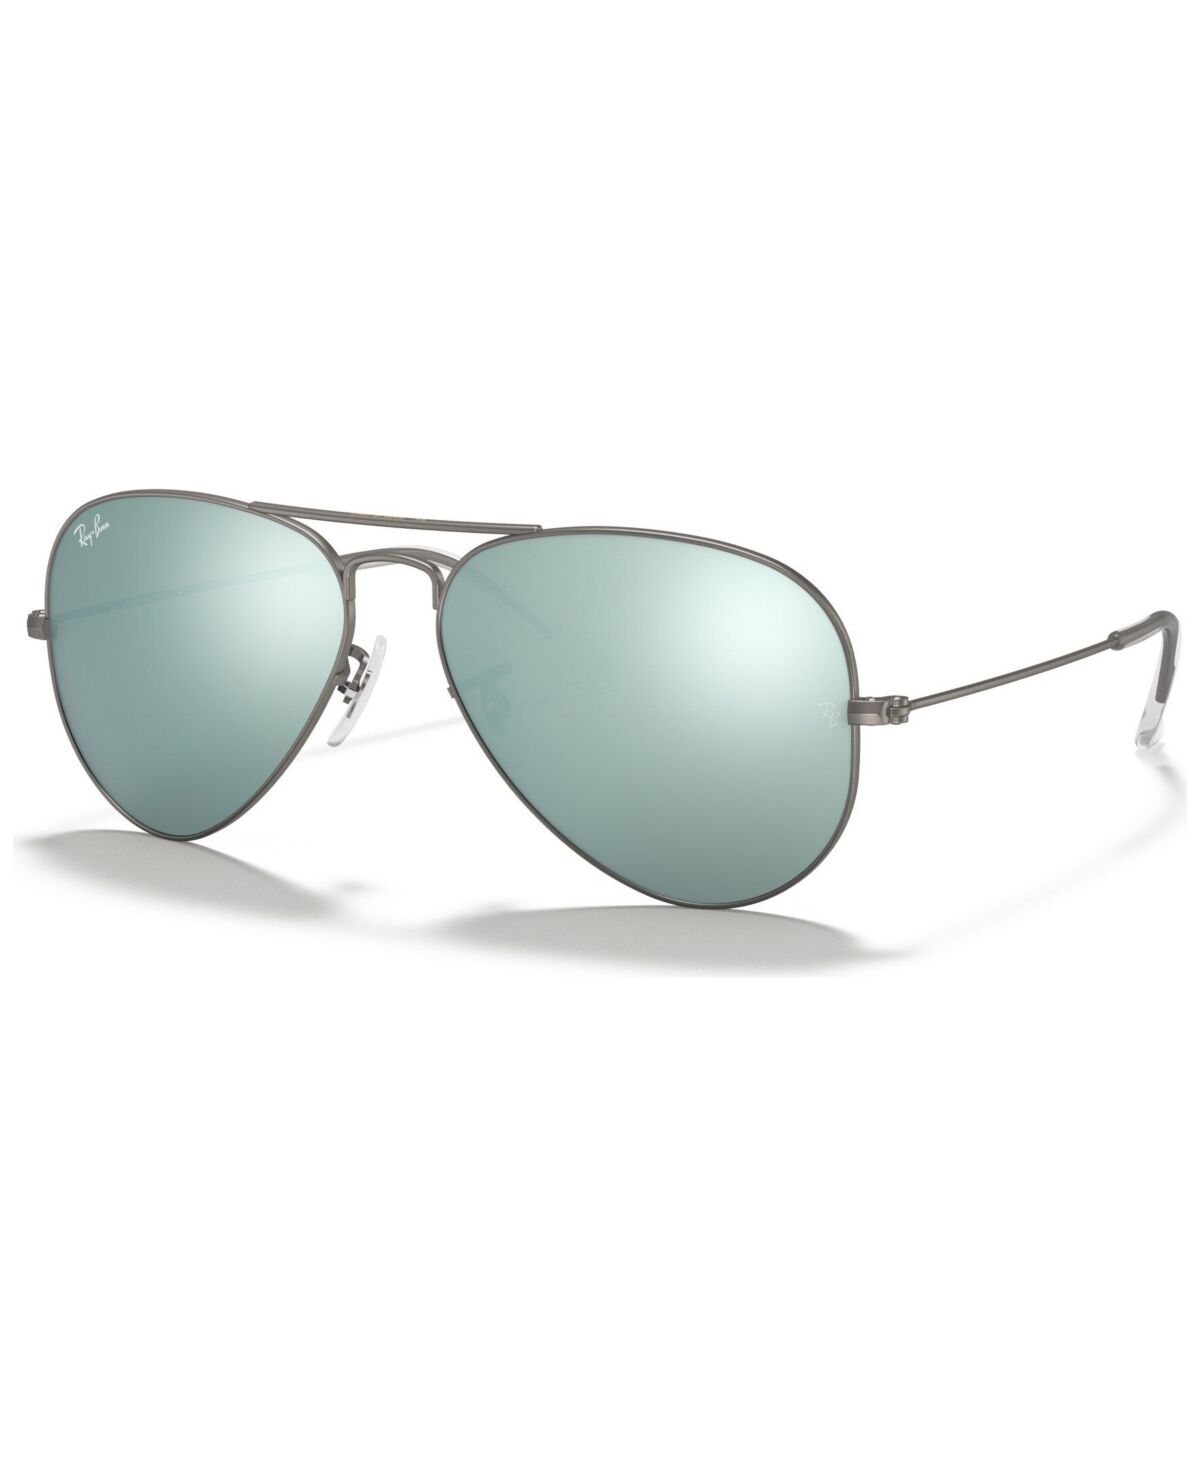 Ray-Ban Sunglasses, RB3025 Aviator Mirror - Gunmetal Matte, Silver Mirror